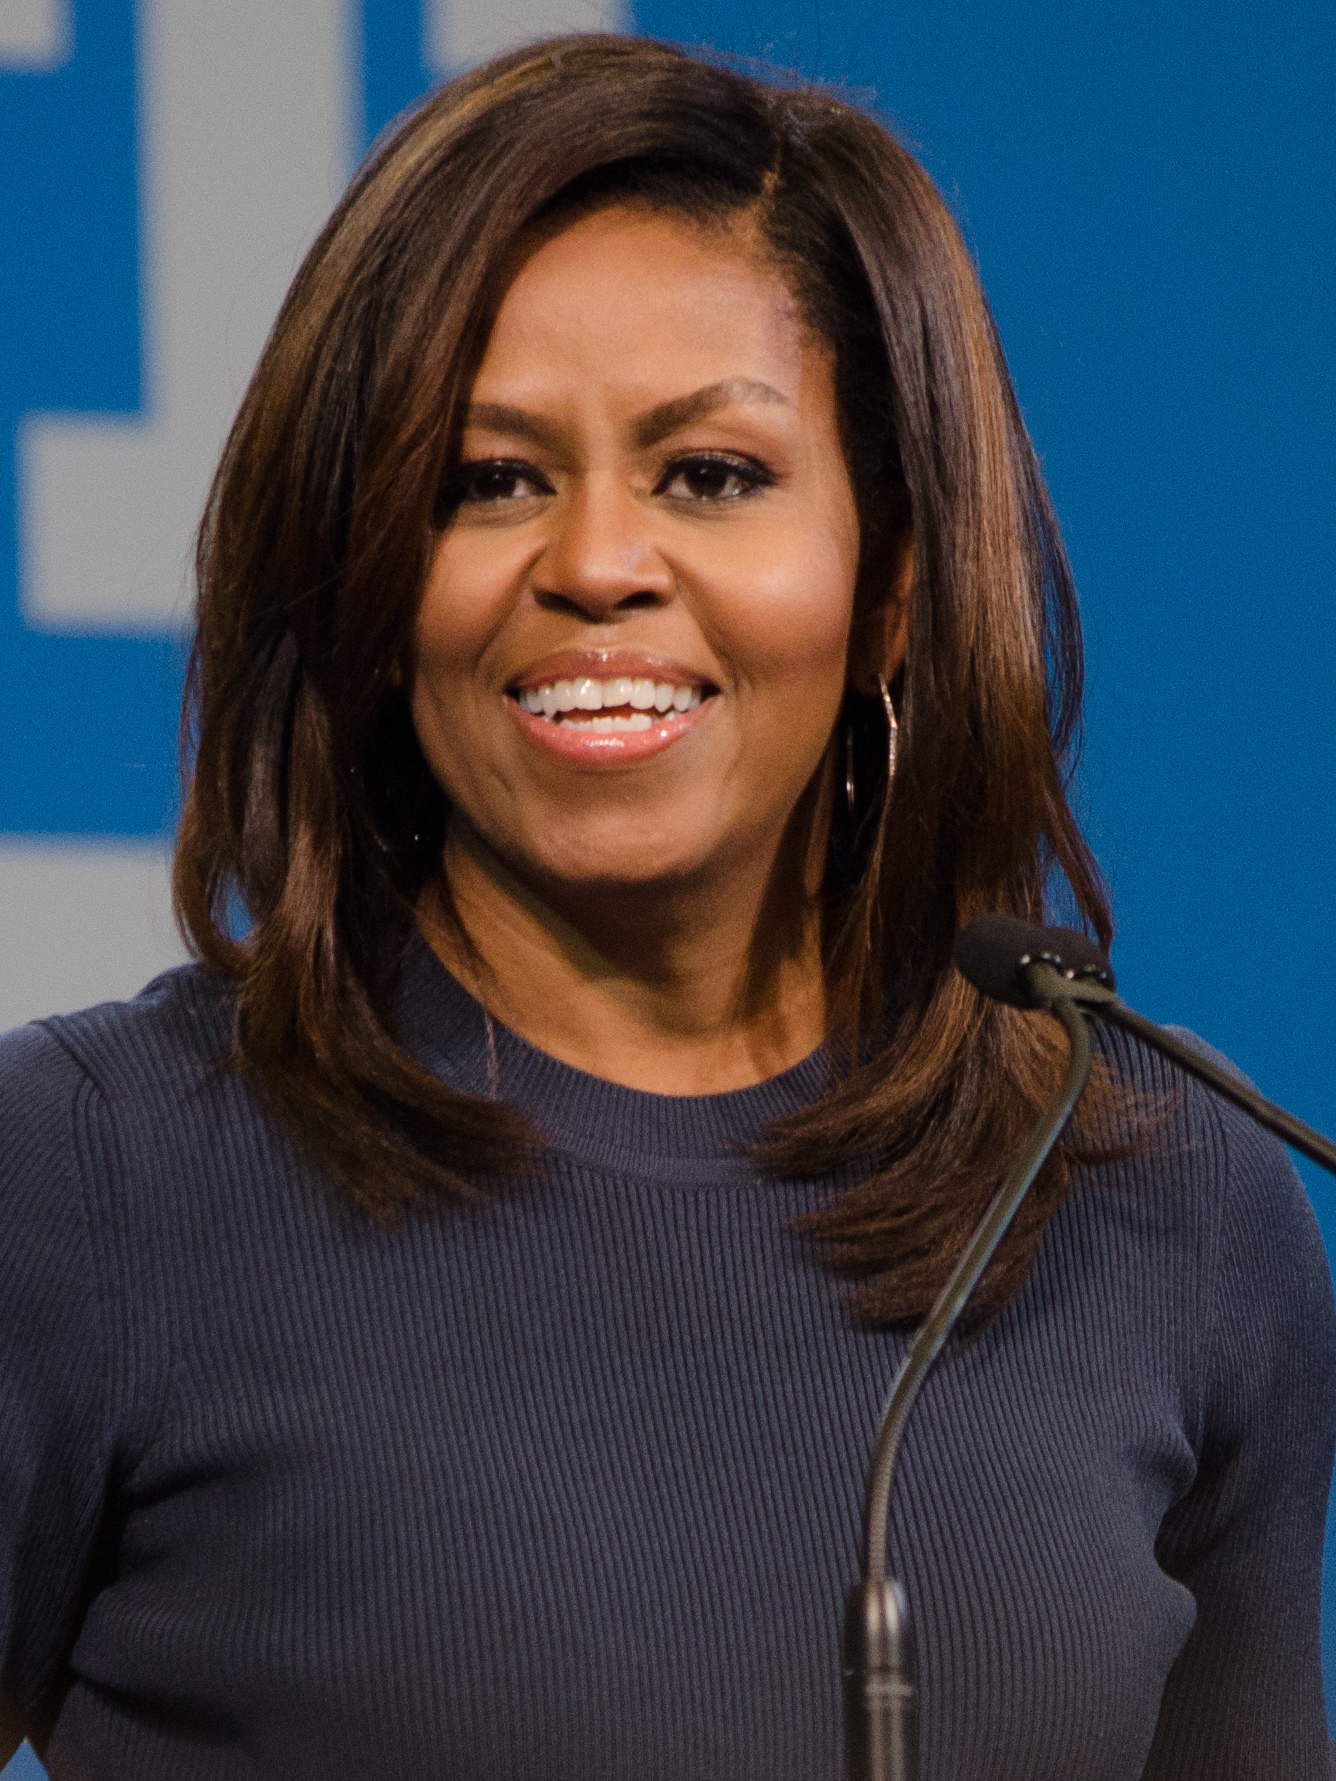 Poet Michelle Obama